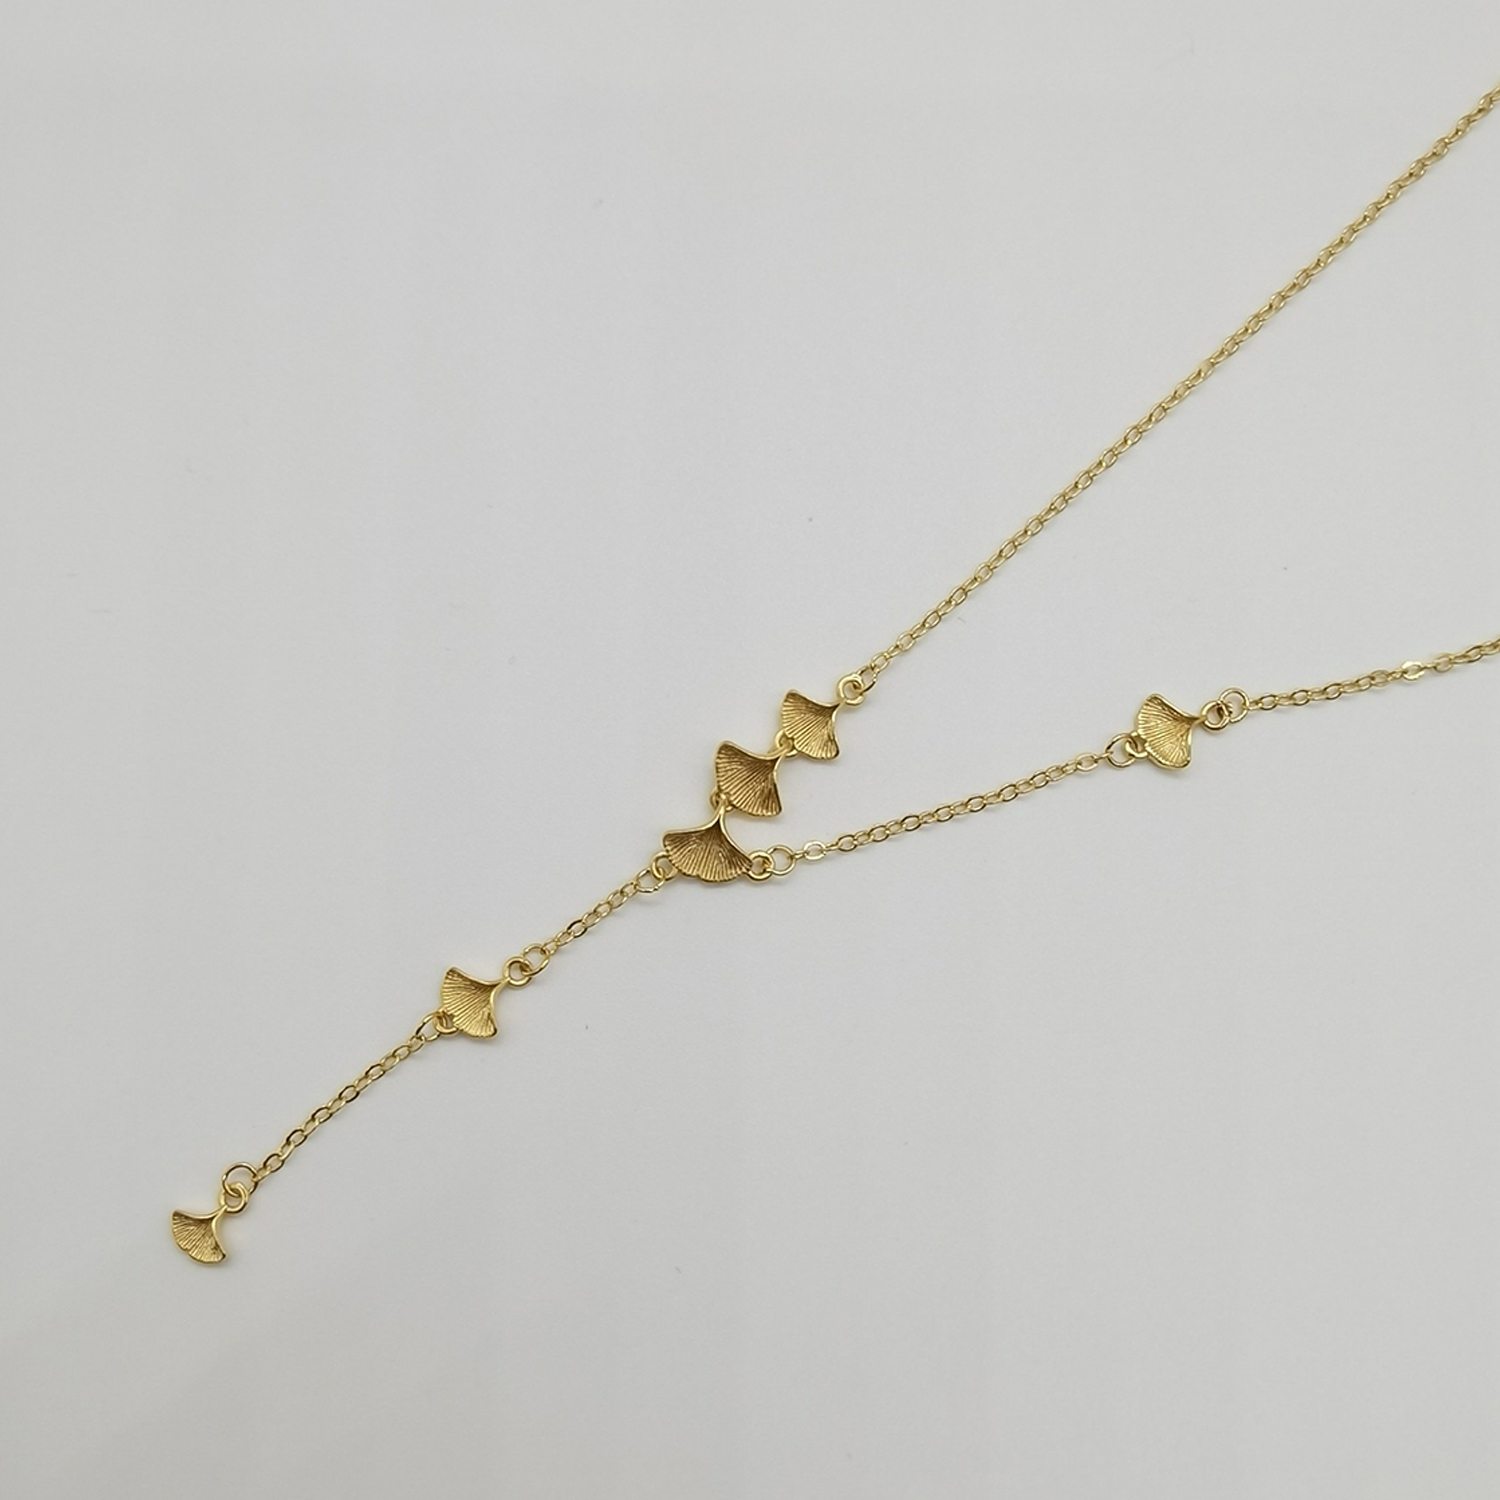 Alluvial gold vacuum electroplating 24K gold Ginkgo leaf necklace